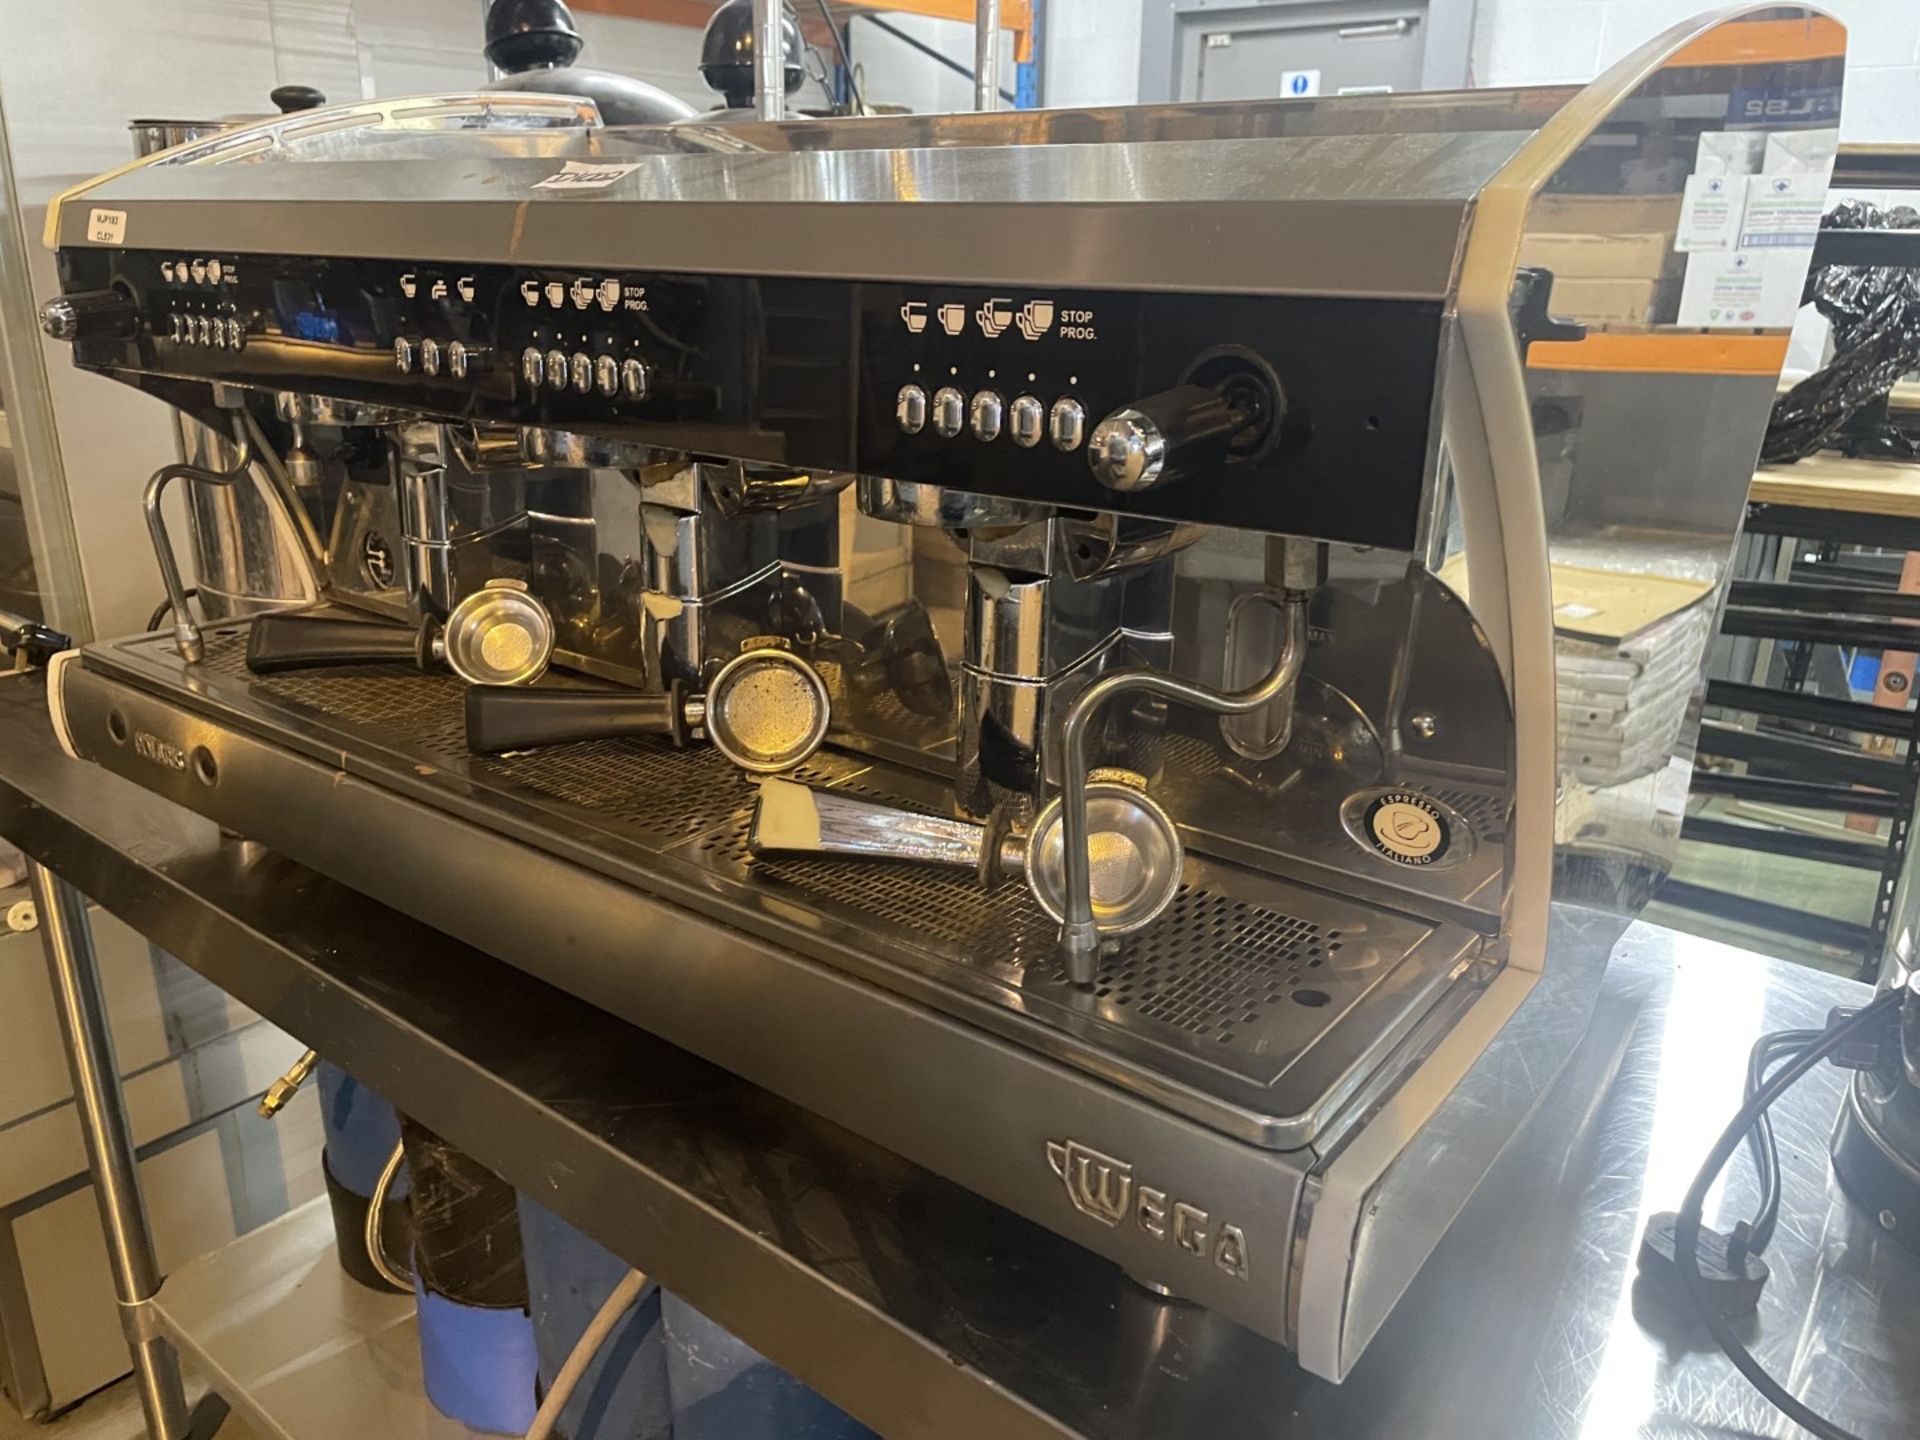 1 x Polaris Wega 3 Group Commercial Espresso Coffee Machine - Stainless Steel / Black Exterior - 3 P - Image 3 of 9